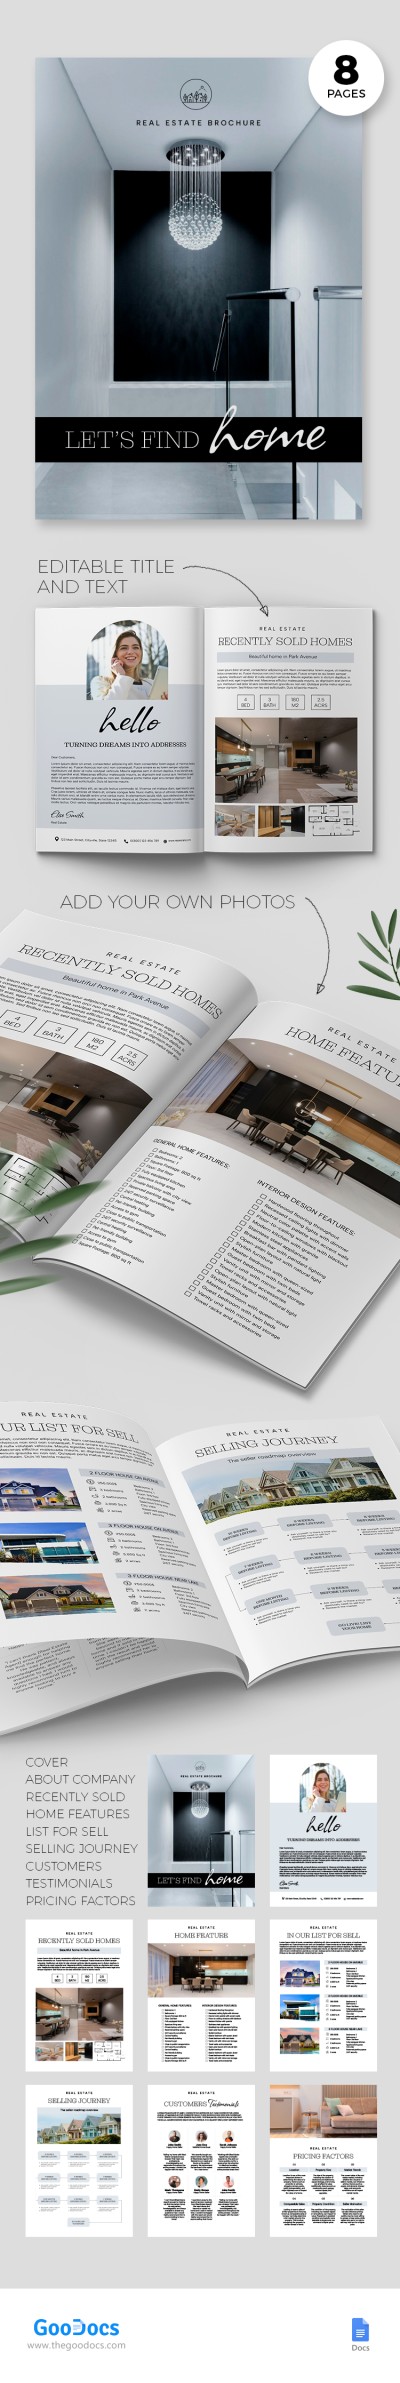 Real Estate Seller Guide Brochure Template